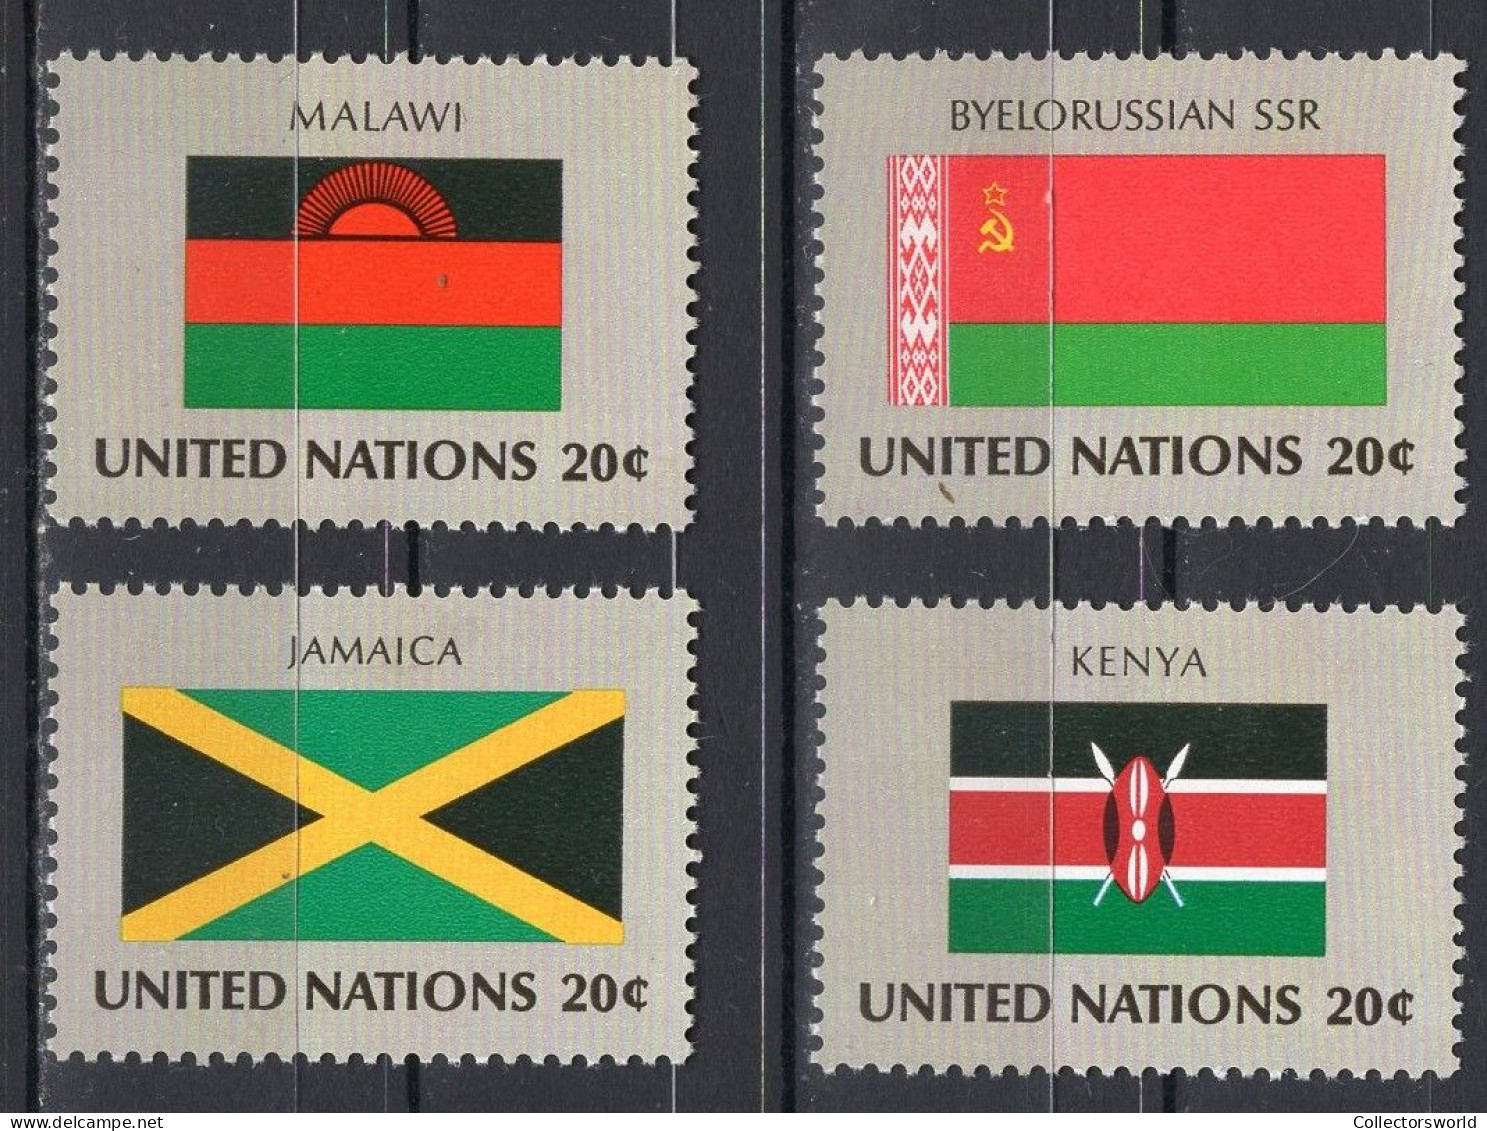 United Nations UN New York Serie 4v 1983 Flag Serie Malawi Jamaica Kenya Belarus MNH - Ongebruikt